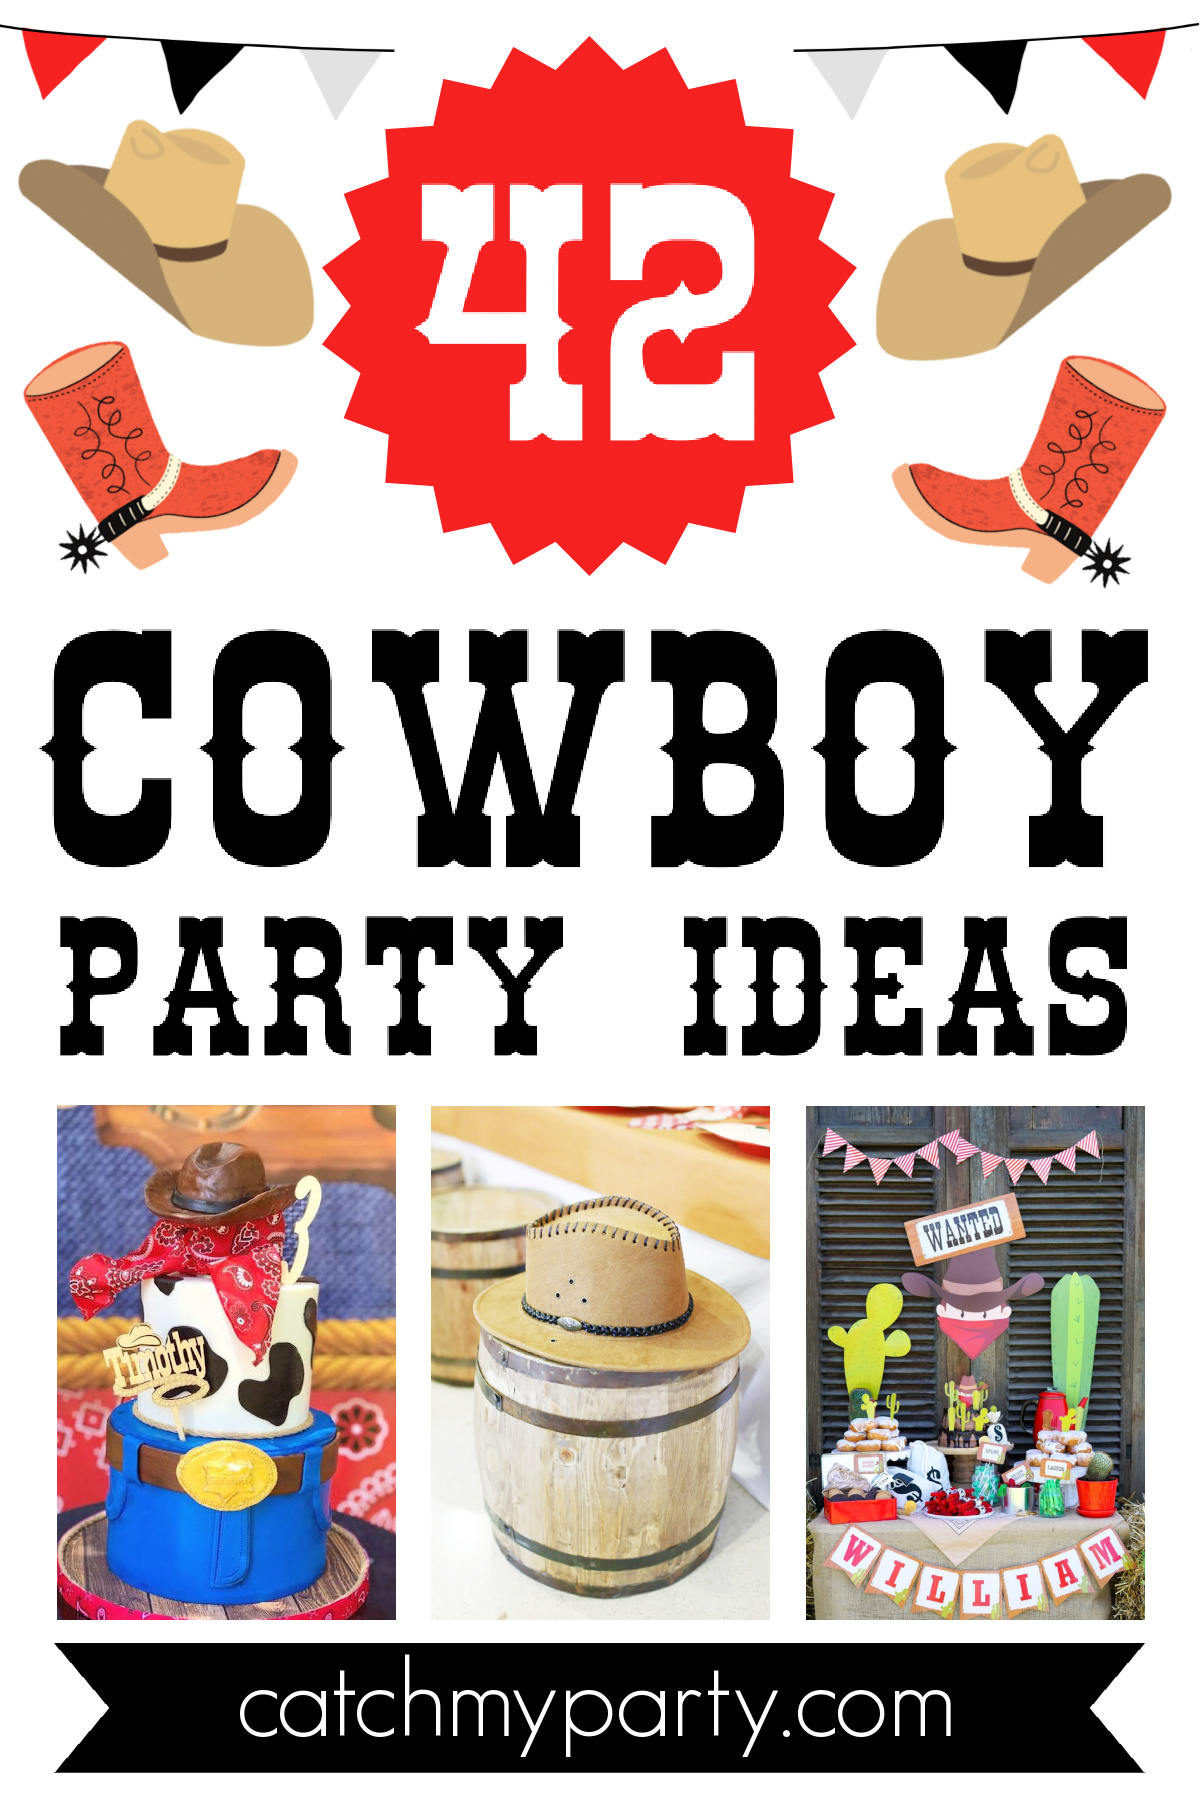 42 Fantastic Cowboy Themed Party Ideas You'll Enjoy!